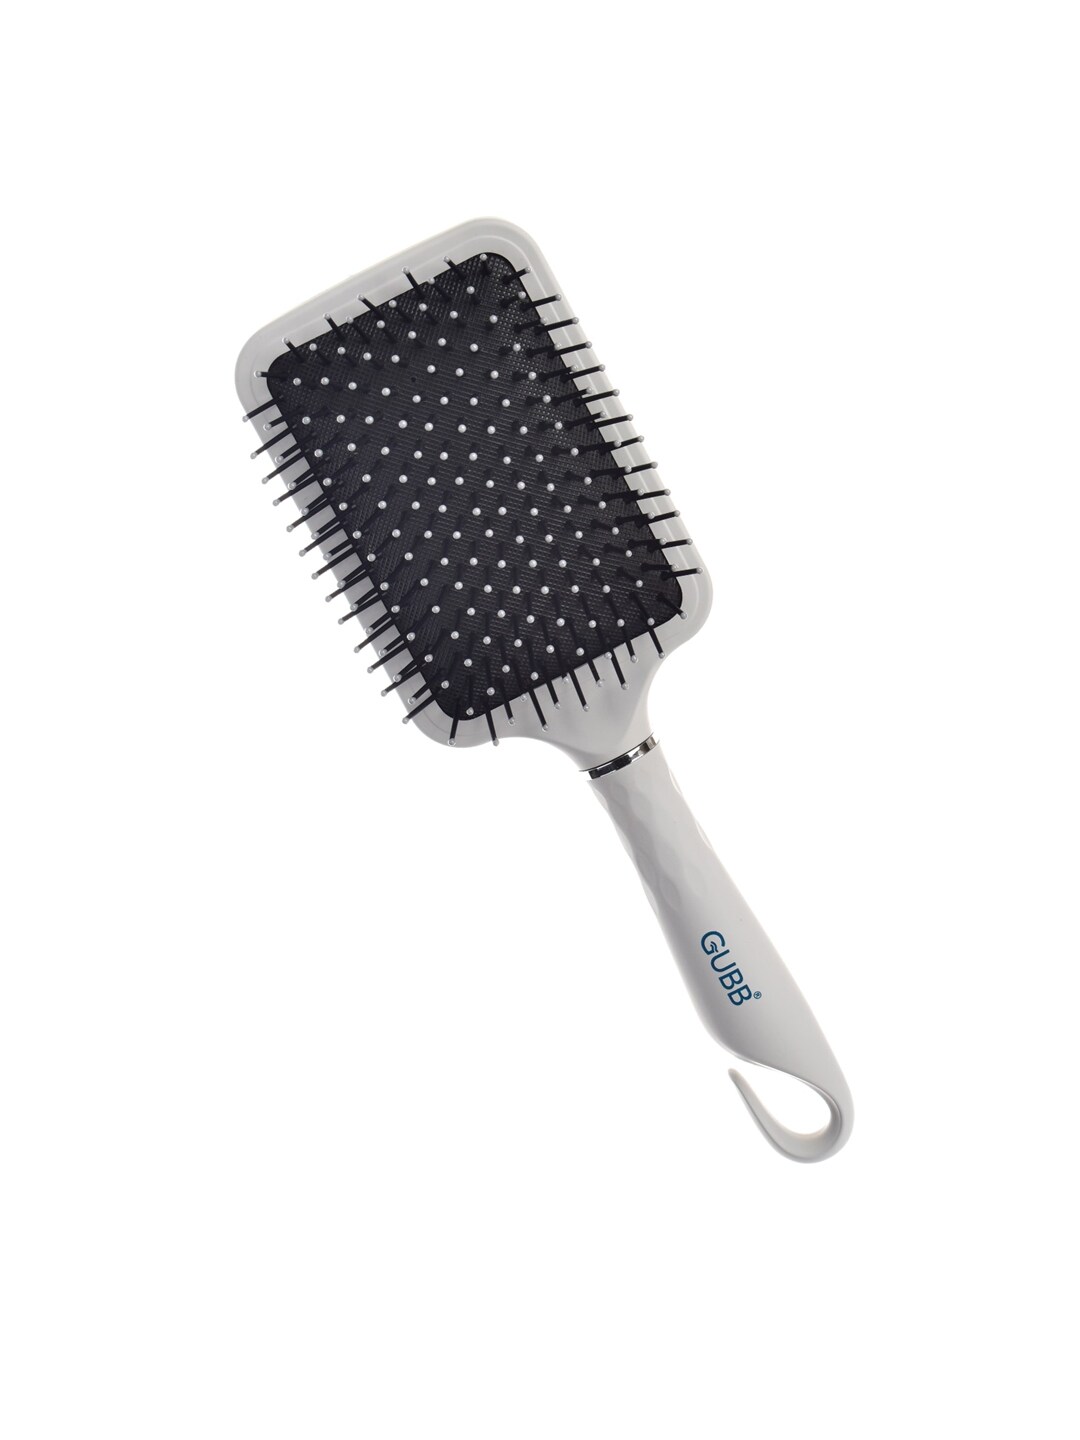 GUBB Serenity Hues Paddle Hair Brush (9888G-D) Price in India